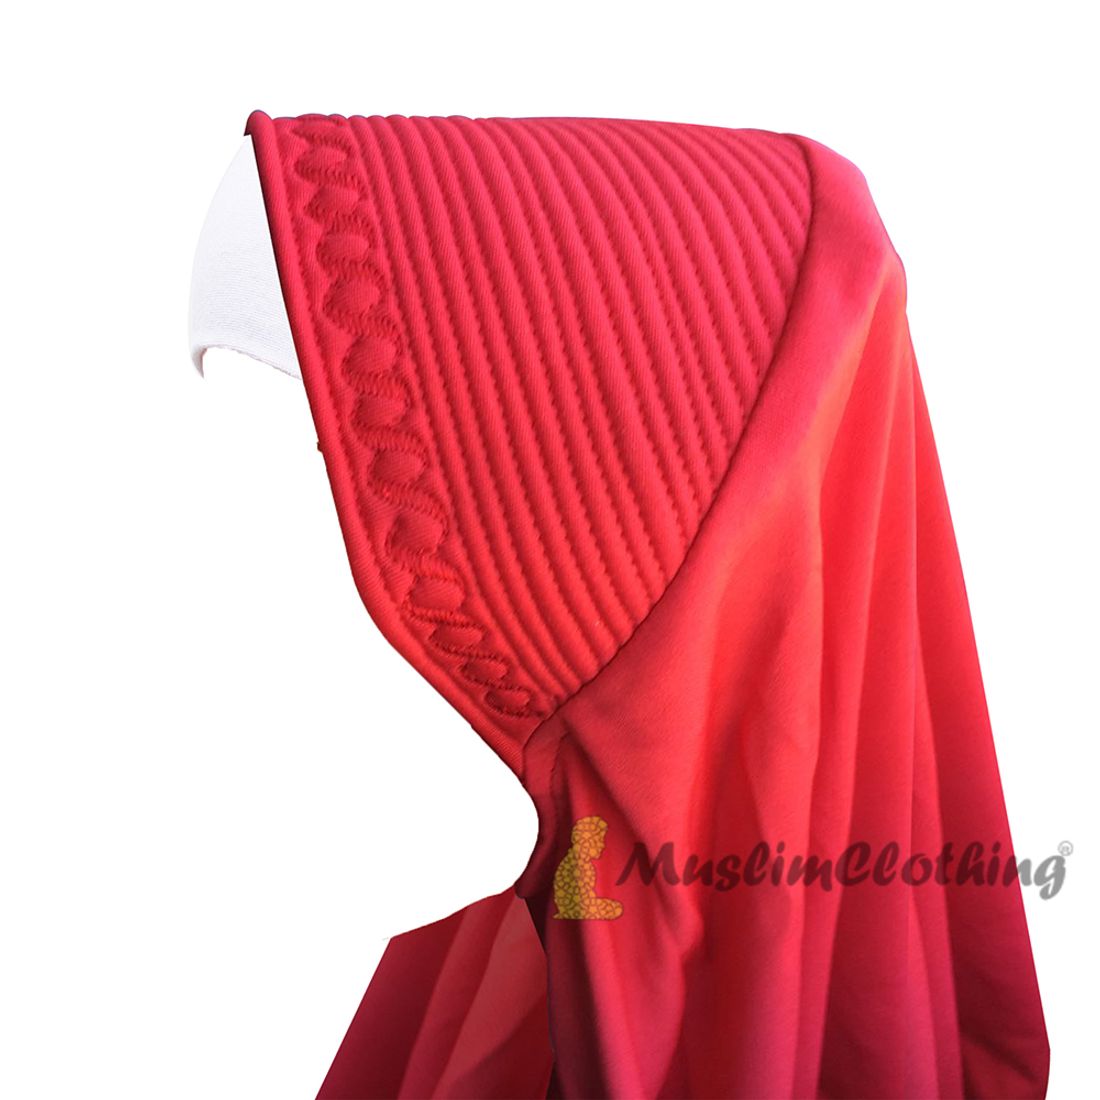 Instant Pull-on Easy Hijab Jilbabs in Various Red – Padded Visser Shoulder-length Easy Muslimah Khimar